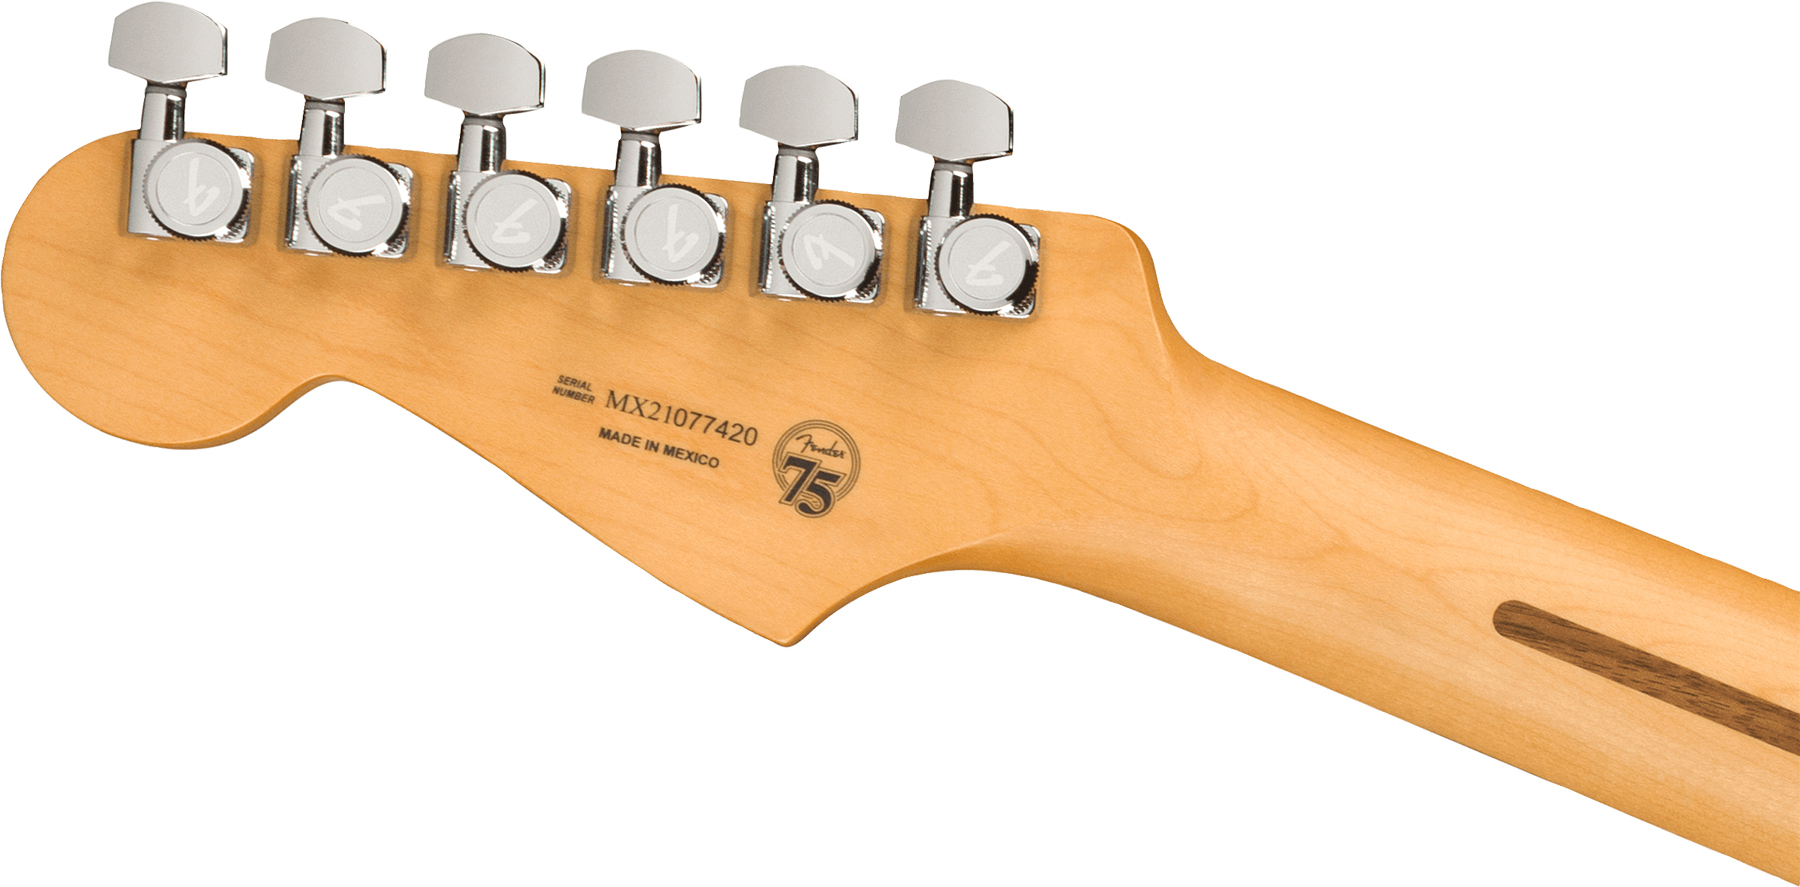 Fender Strat Player Plus Mex Hss Trem Pf - Silverburst - Str shape electric guitar - Variation 3